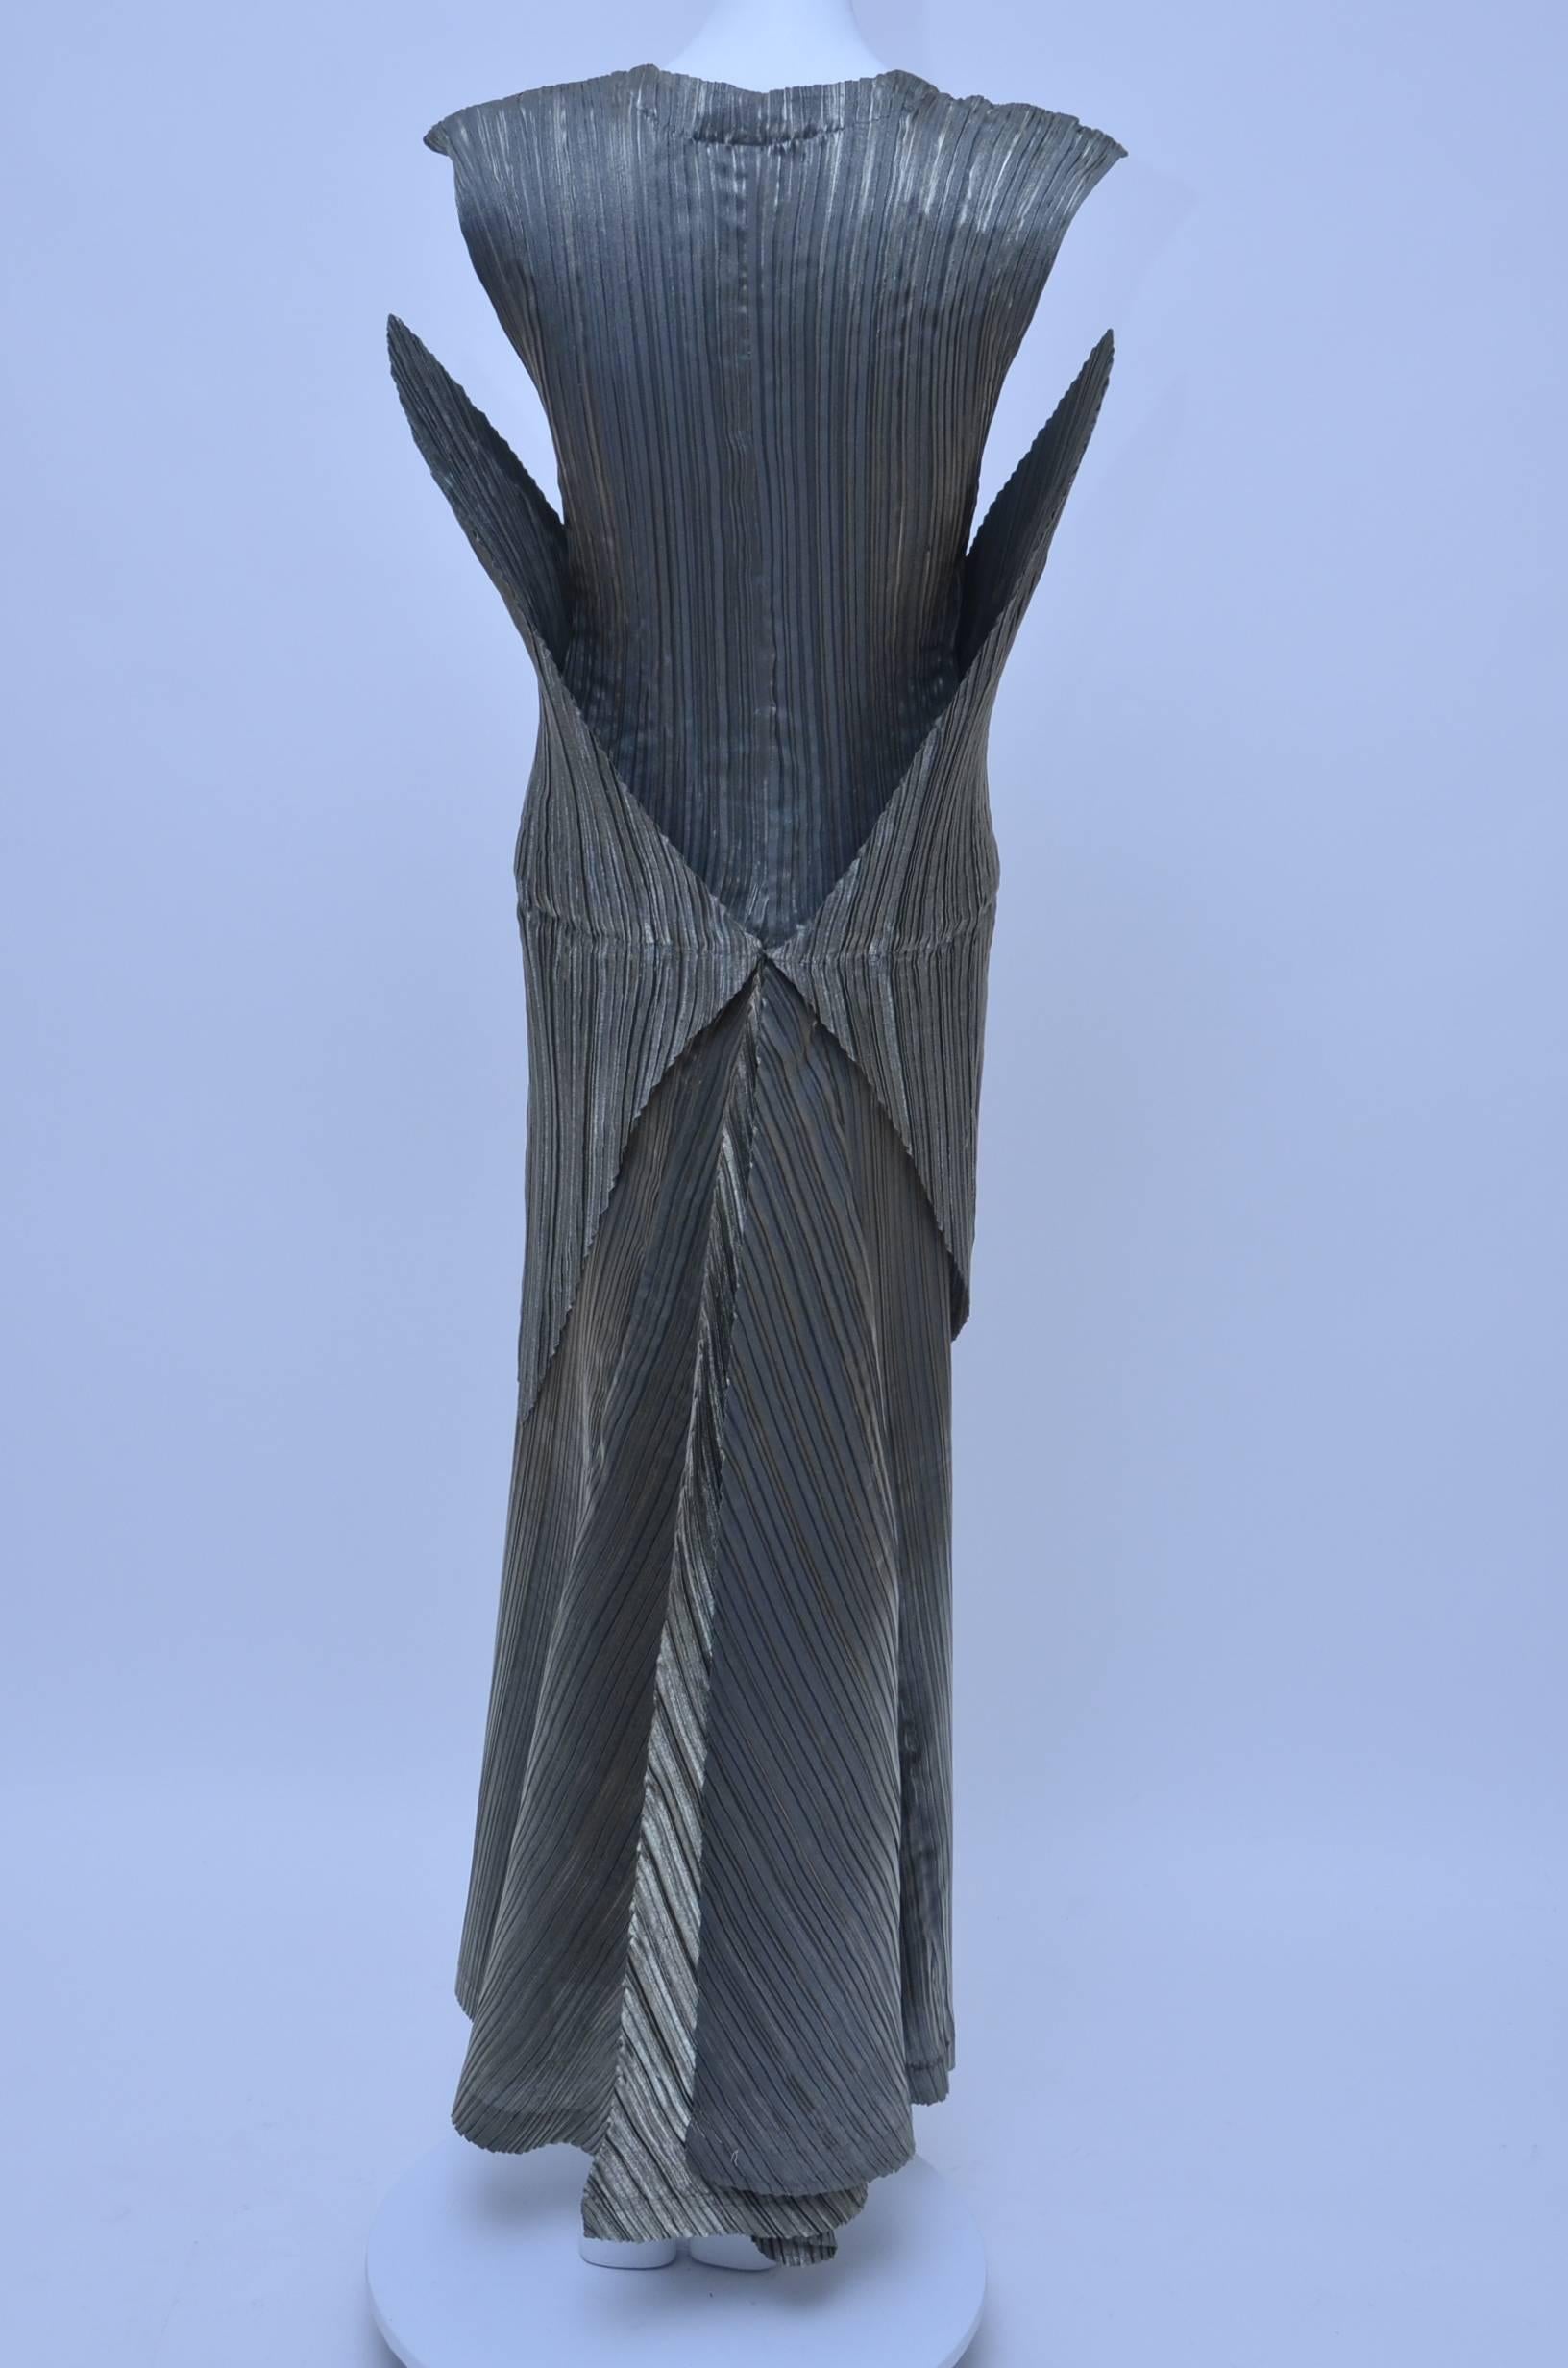 ISSEY MIYAKE  Sculptured Ensemble Fall/Winter 1989–90  Metropolitan Museum  NY  1